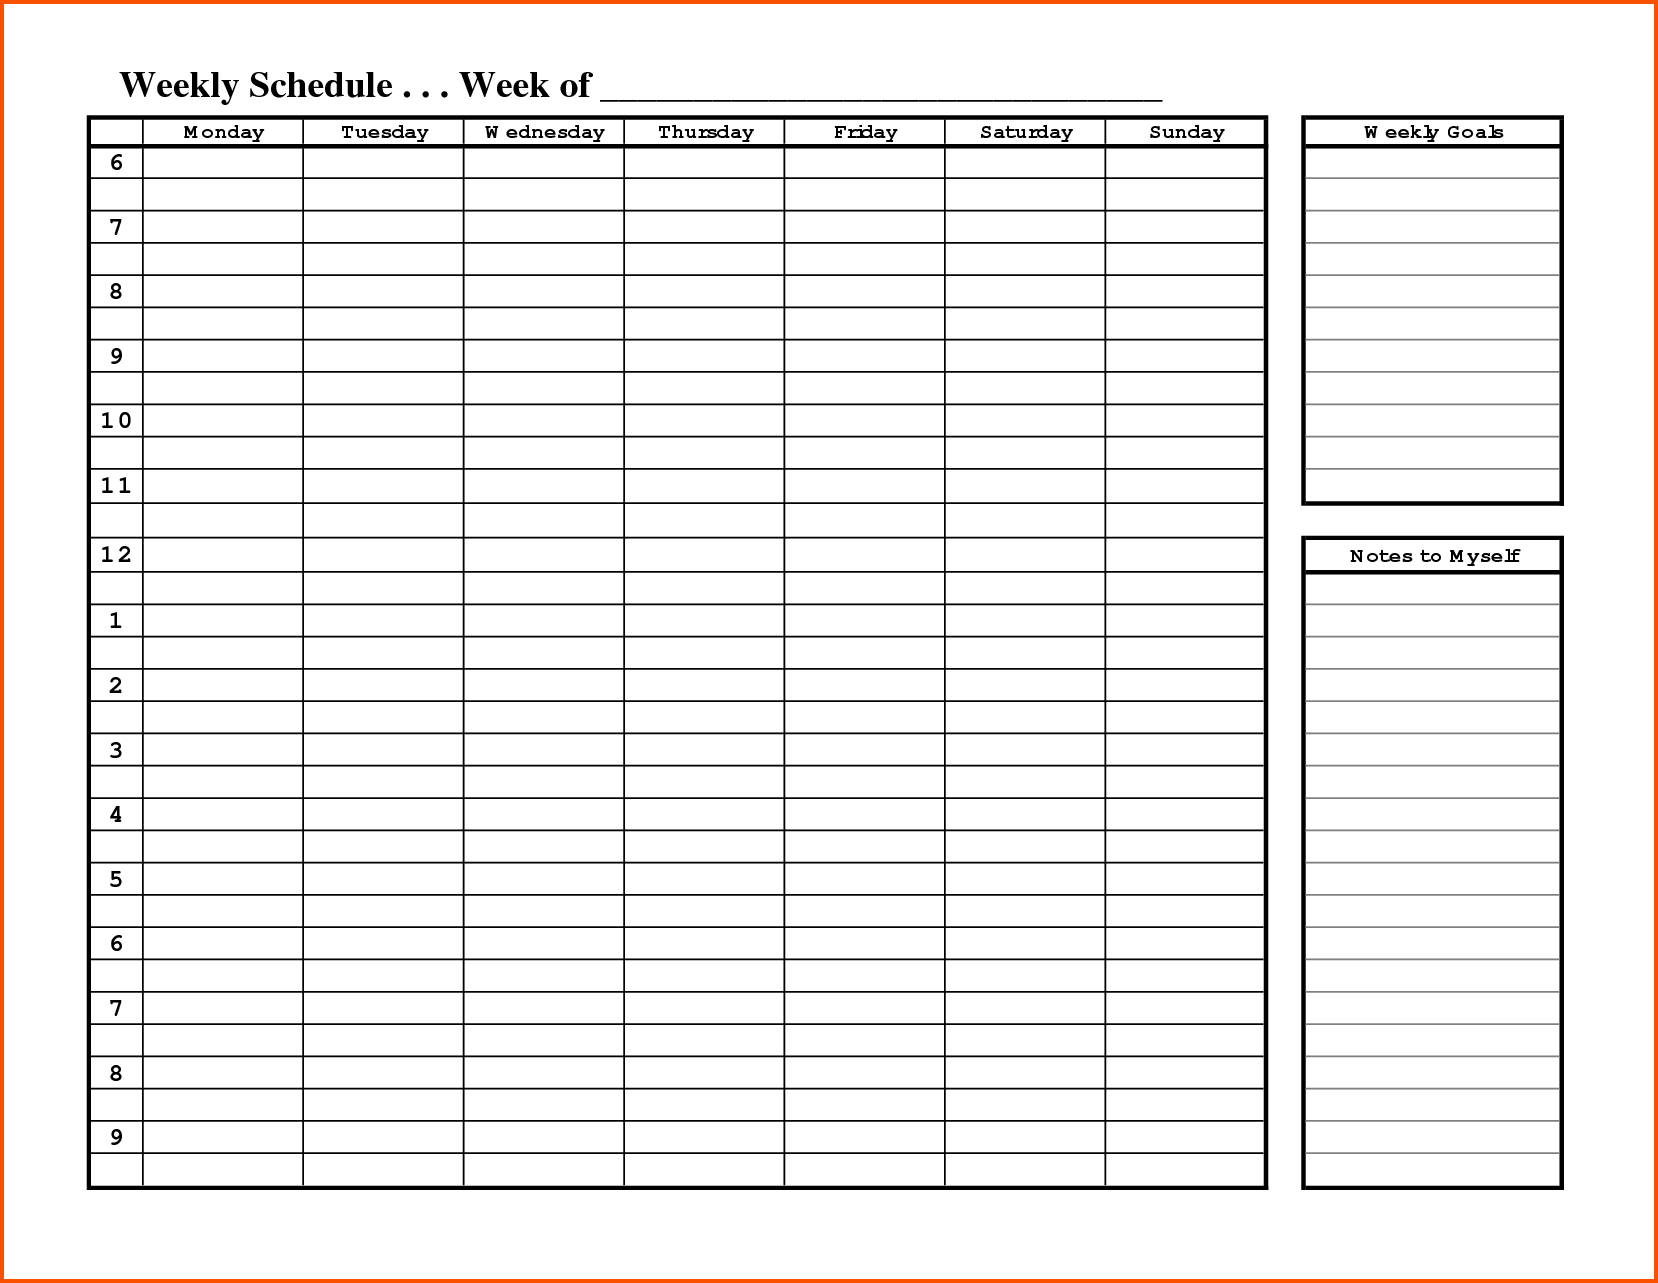 Blank Attendance Sheet.attendance Sheet Template Loan  Free - Free Printable Attendance Forms For Teachers